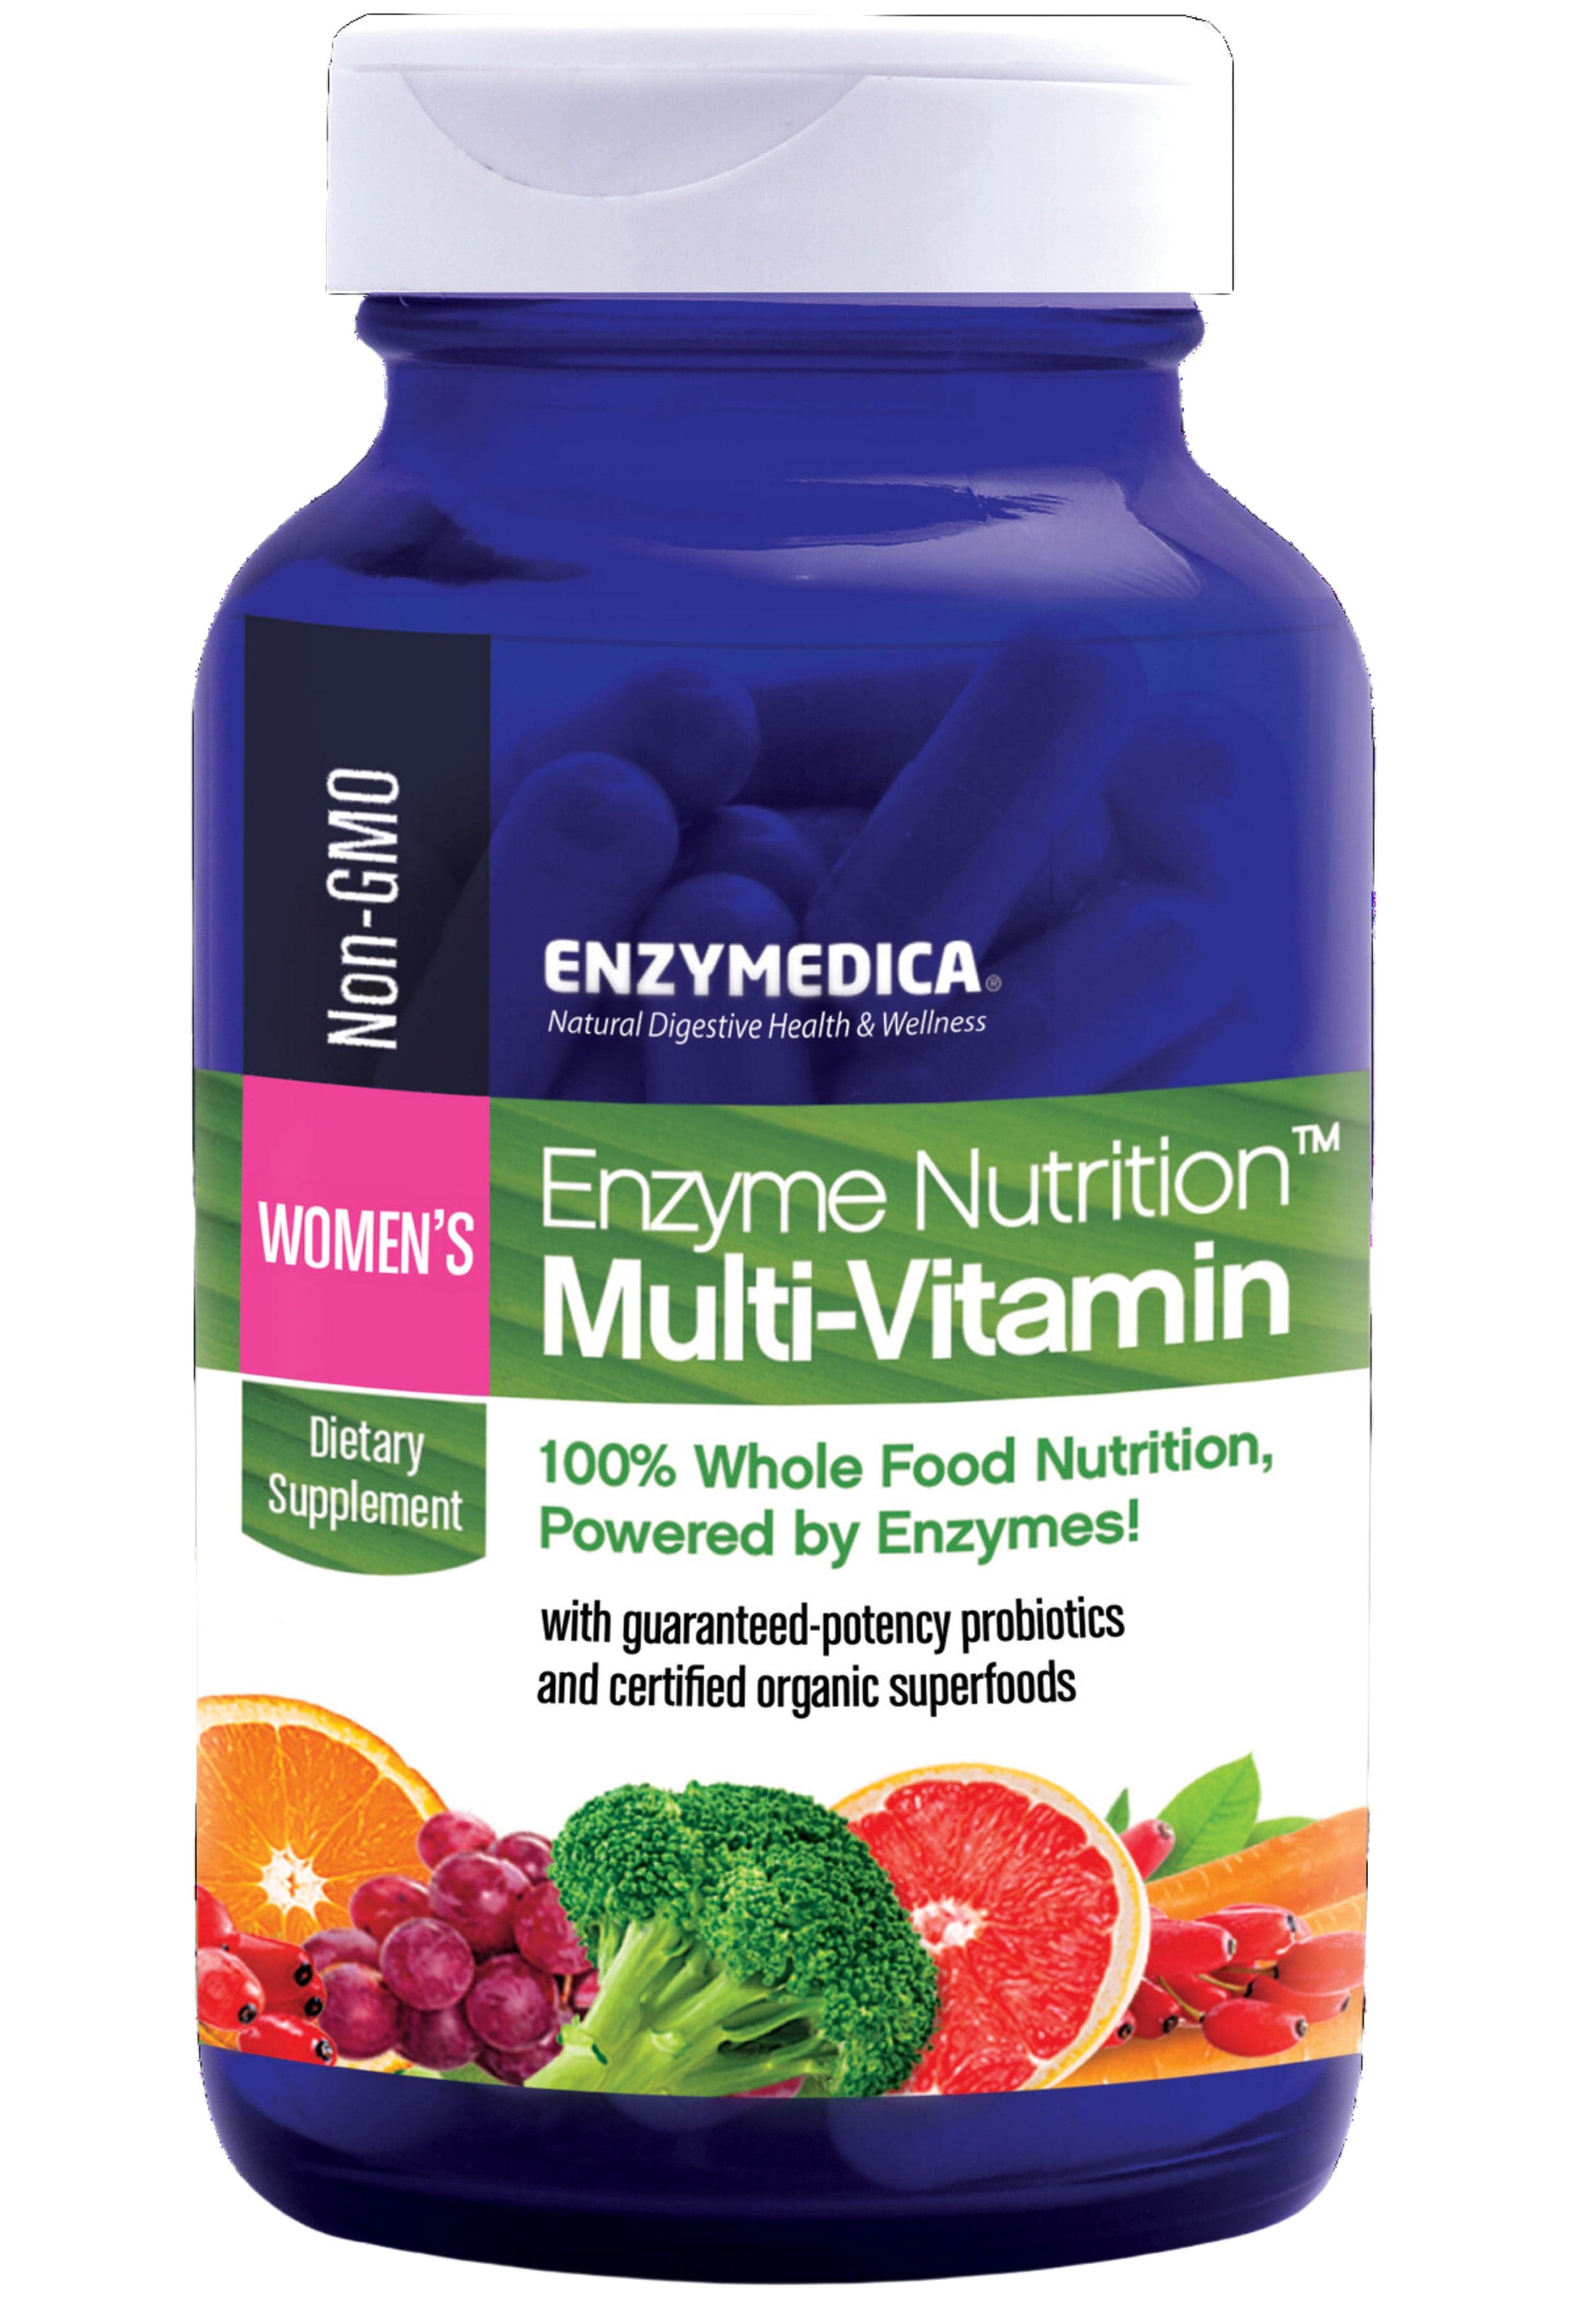 Enzymedica Enzyme Nutrition Multi-Vitamin for Women's